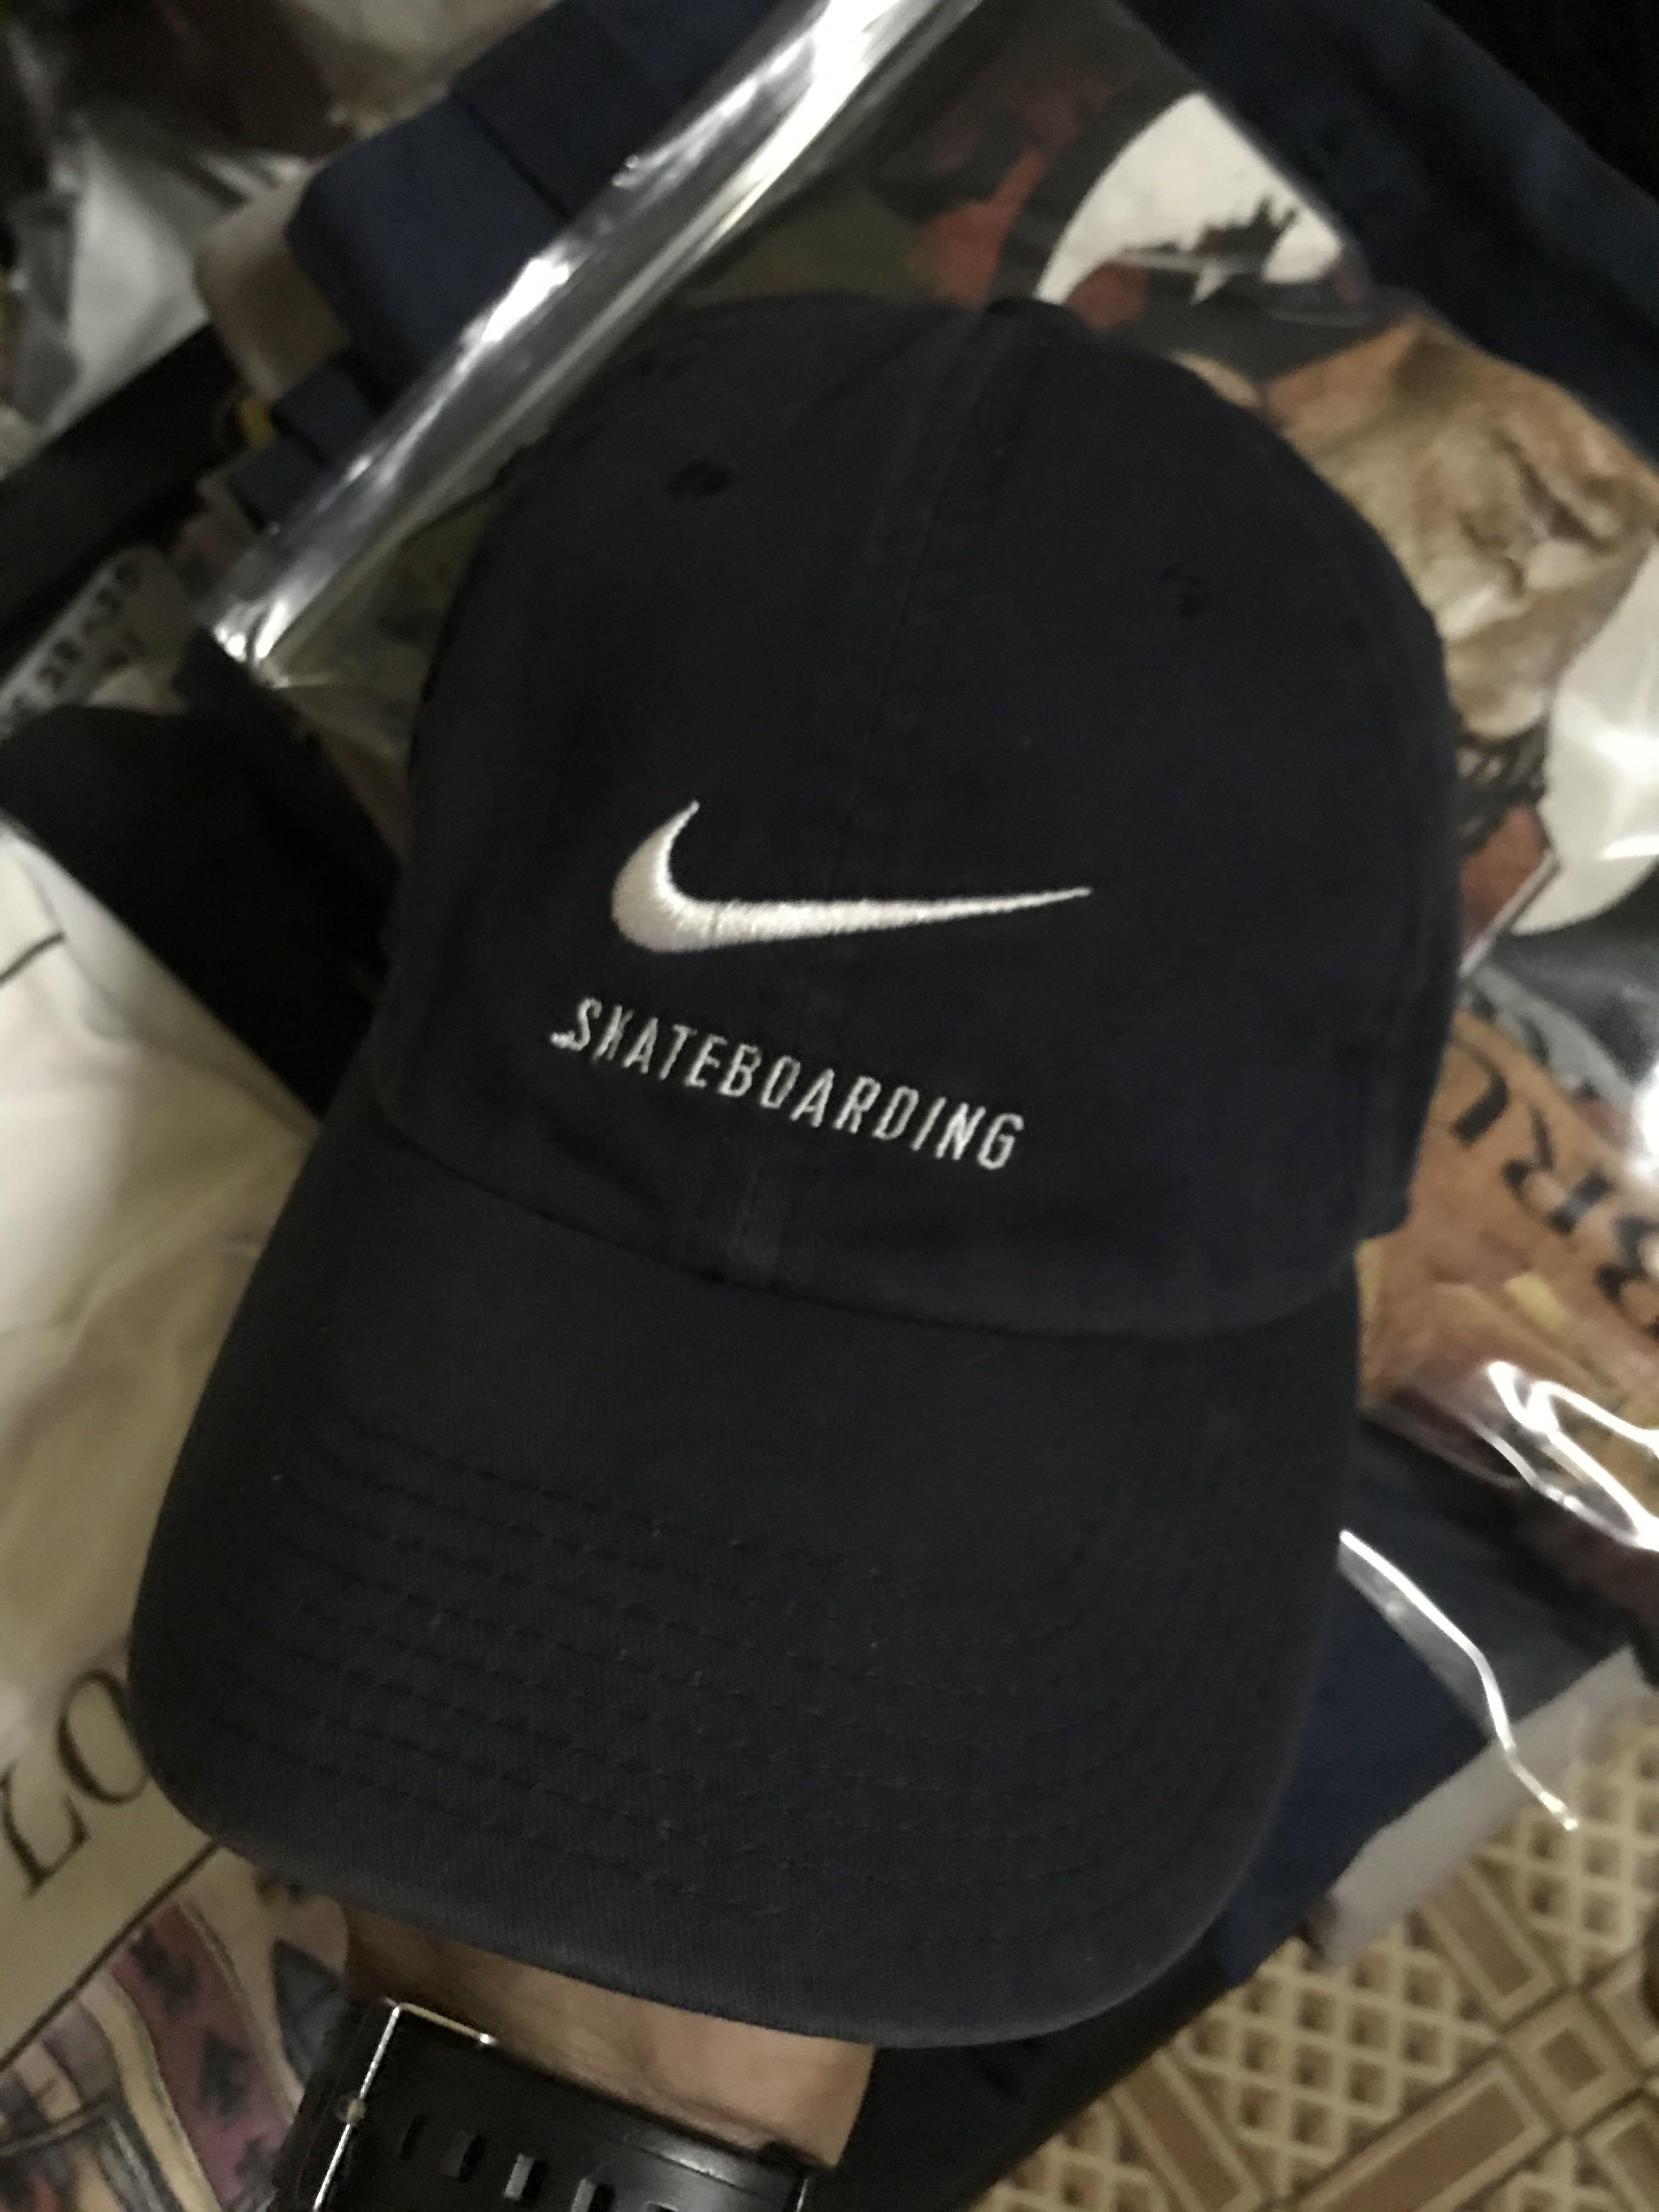 Nike Skateboarding cap, Men's Fashion, & Accessories, & Hats on Carousell